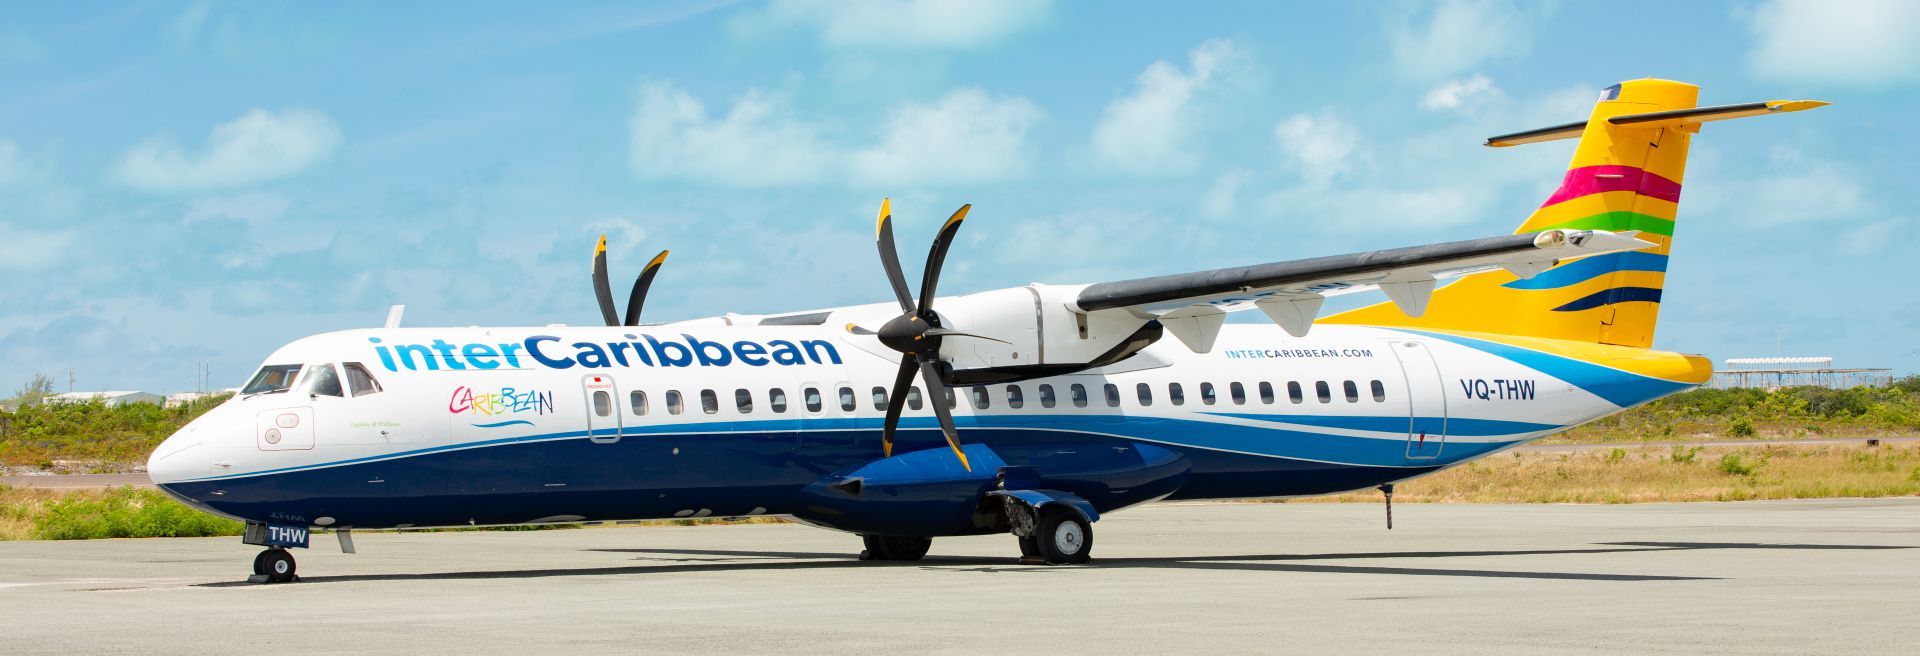 ATR of interCaribbean Airways